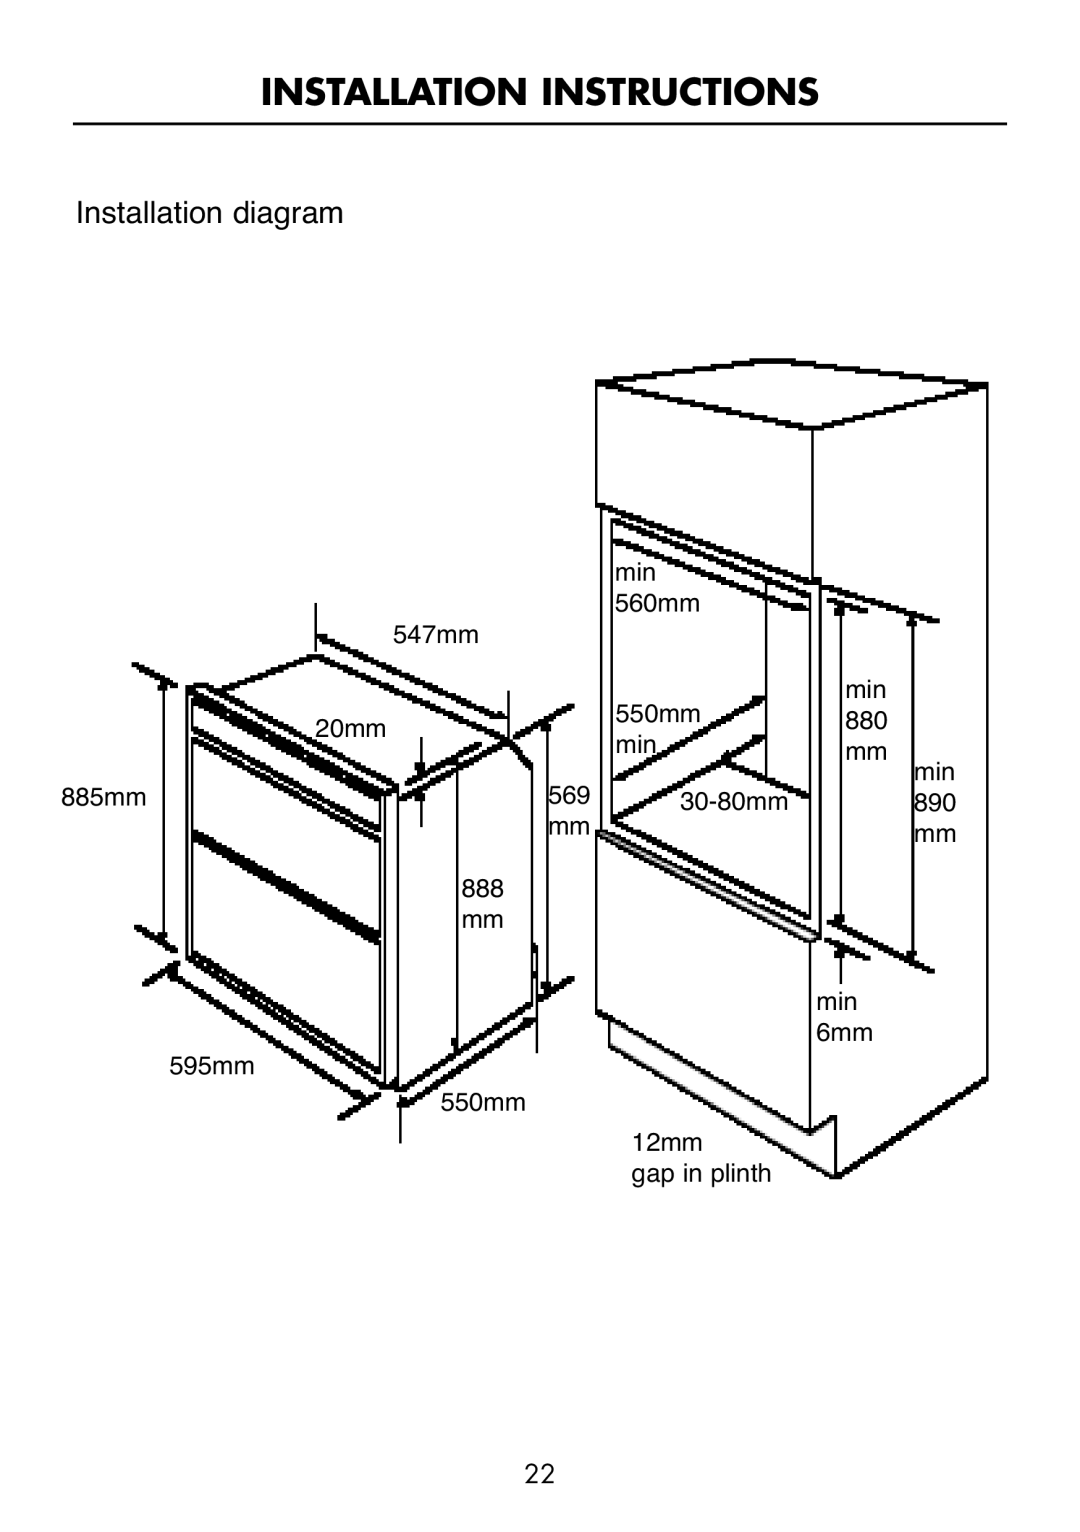 Glen Dimplex Home Appliances Ltd BI 90 MF manual Installation Instructions, Installation diagram 